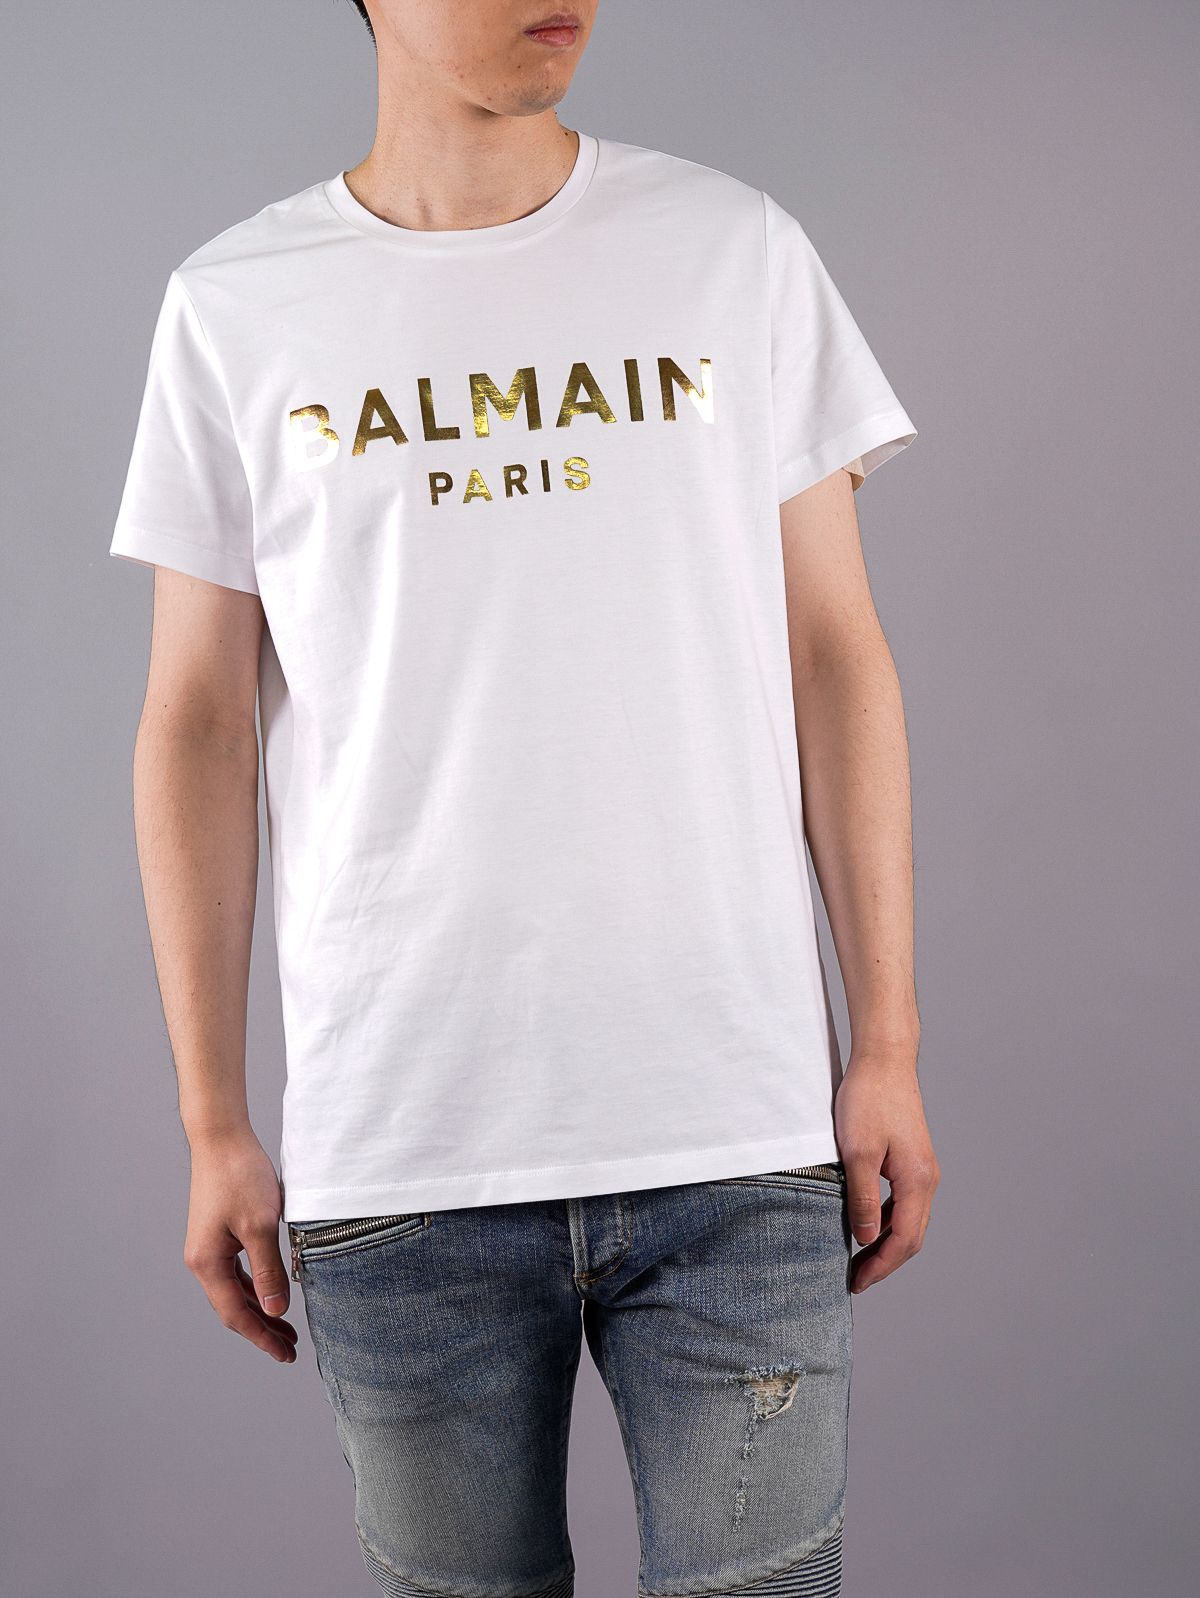 White Cotton T-shirt Gold Balmain Paris Metallic Logo / ホワイト コットン Tシャツ ゴールド  バルマン パリ メタリック ロゴ (ブラック) - S